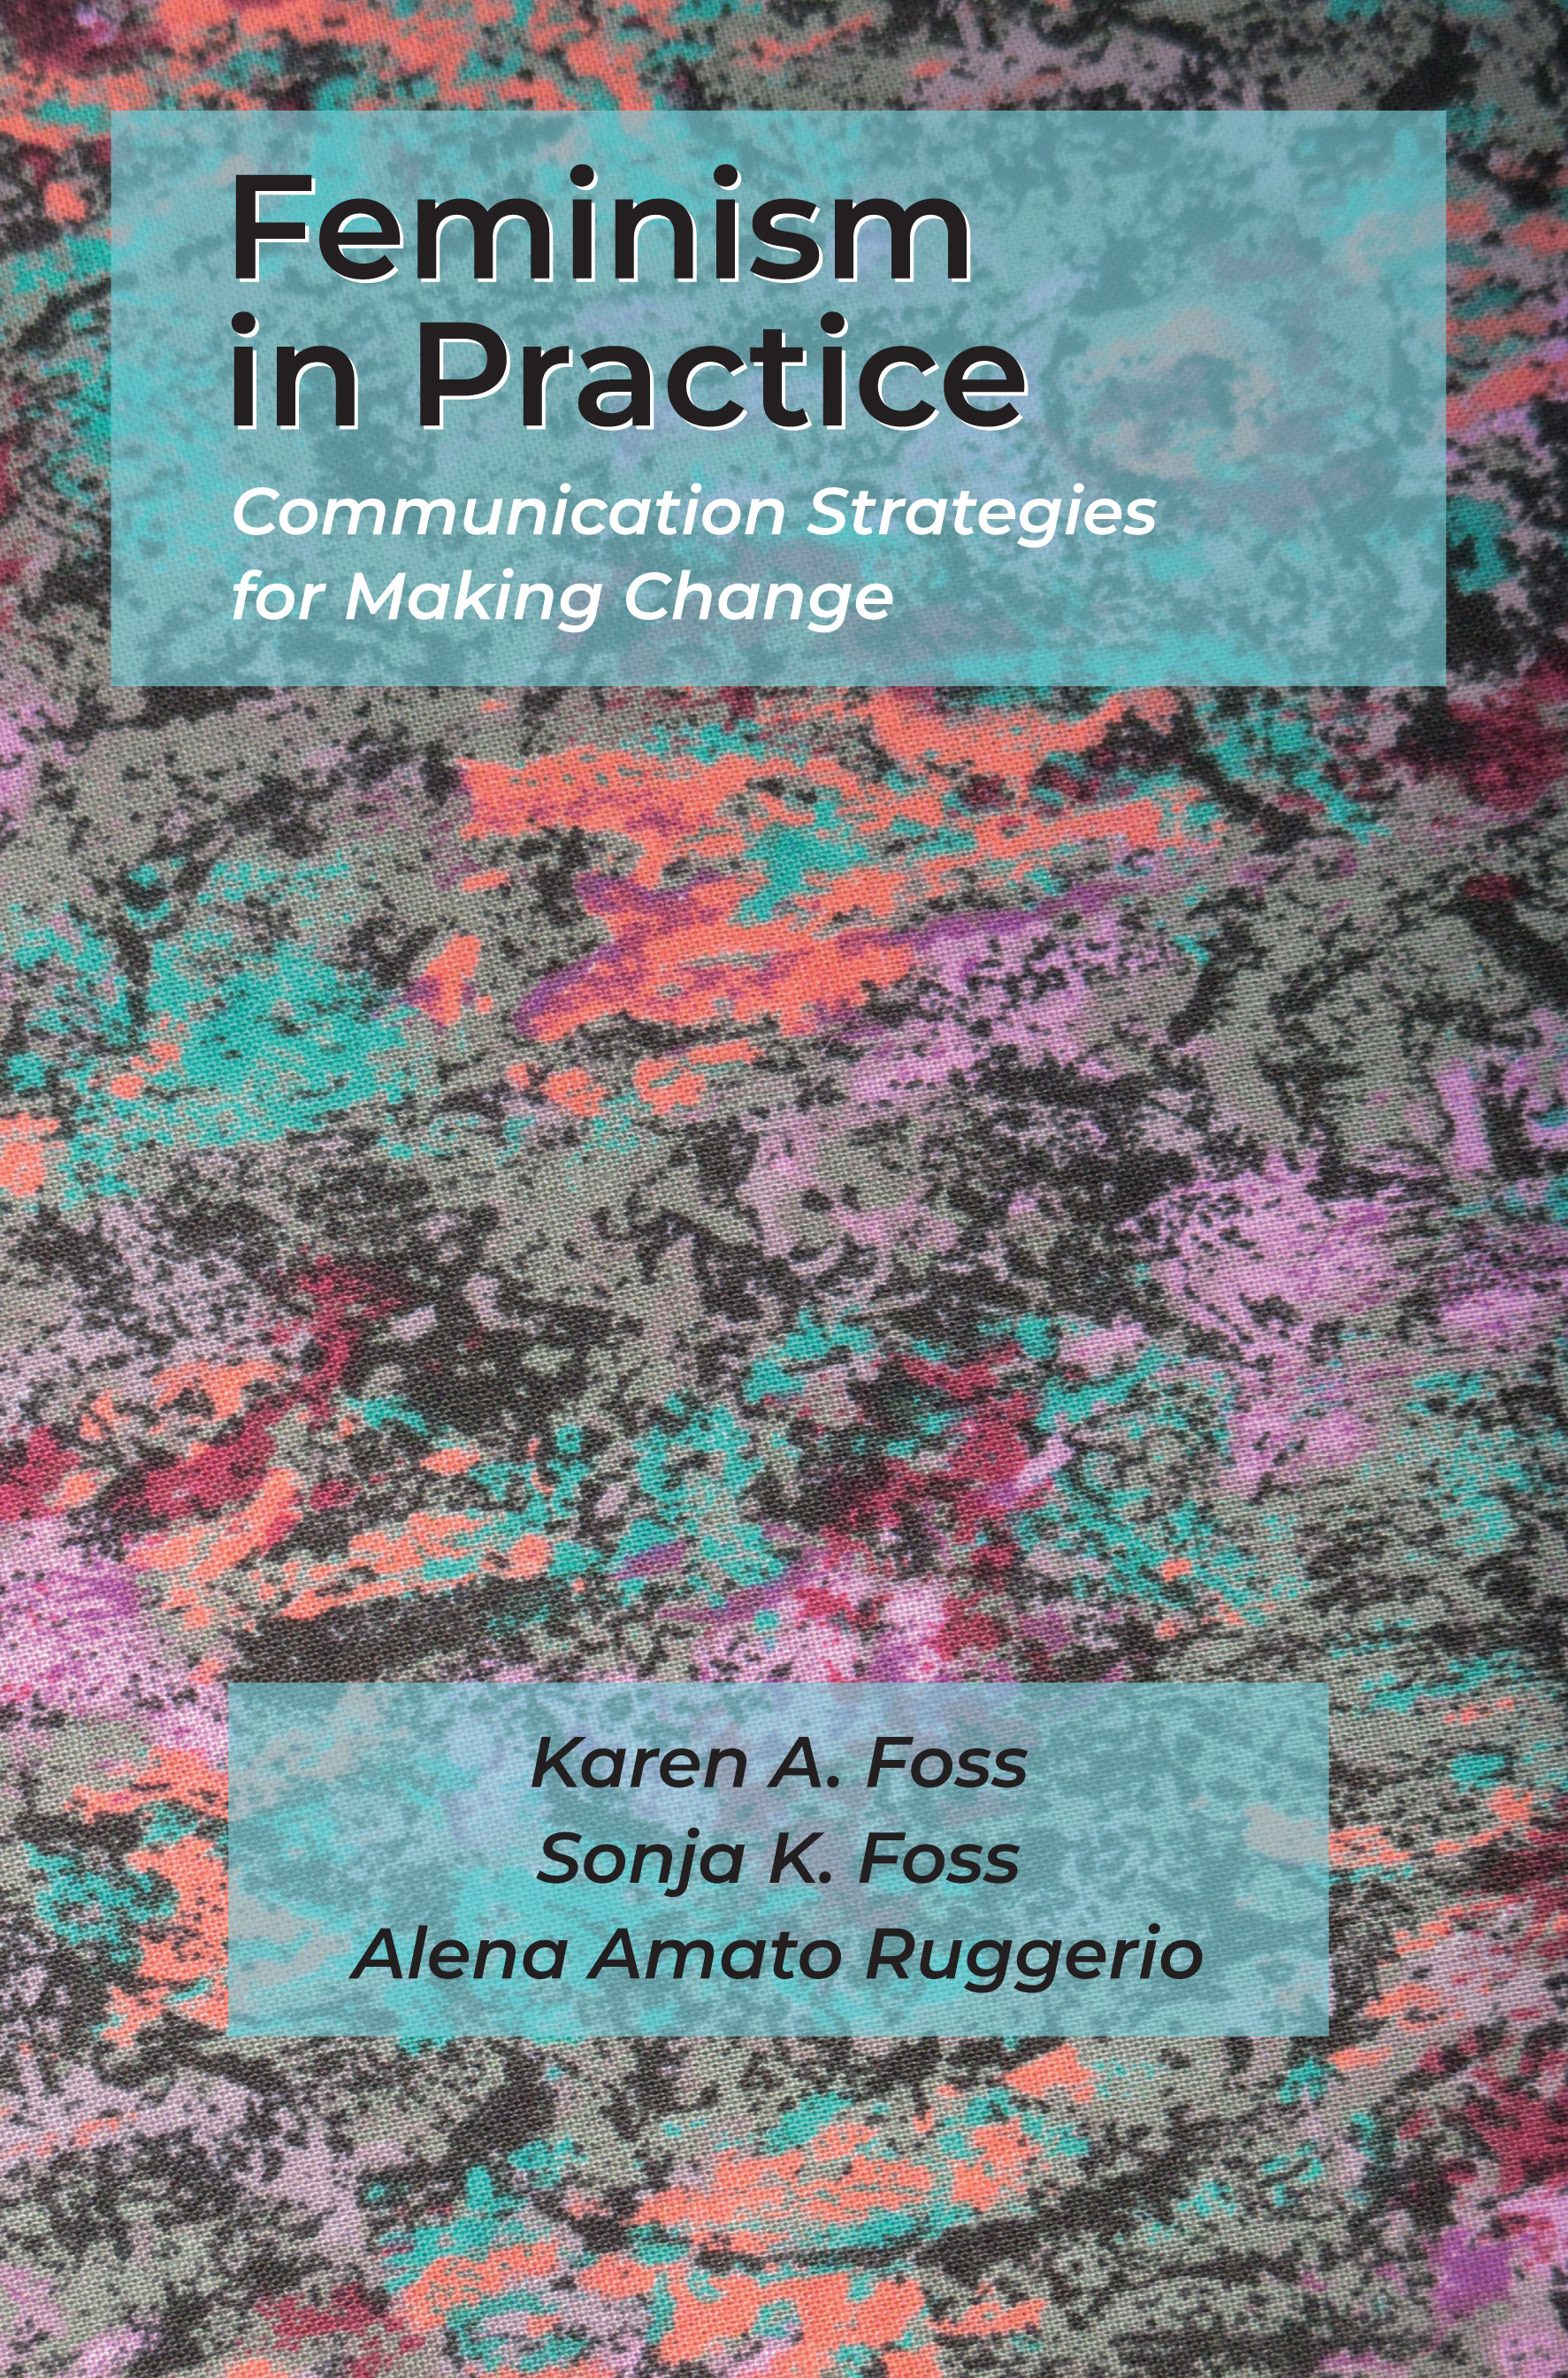 Feminism in Practice: Communication Strategies for Making Change by Karen A. Foss, Sonja K. Foss, Alena Amato Ruggerio